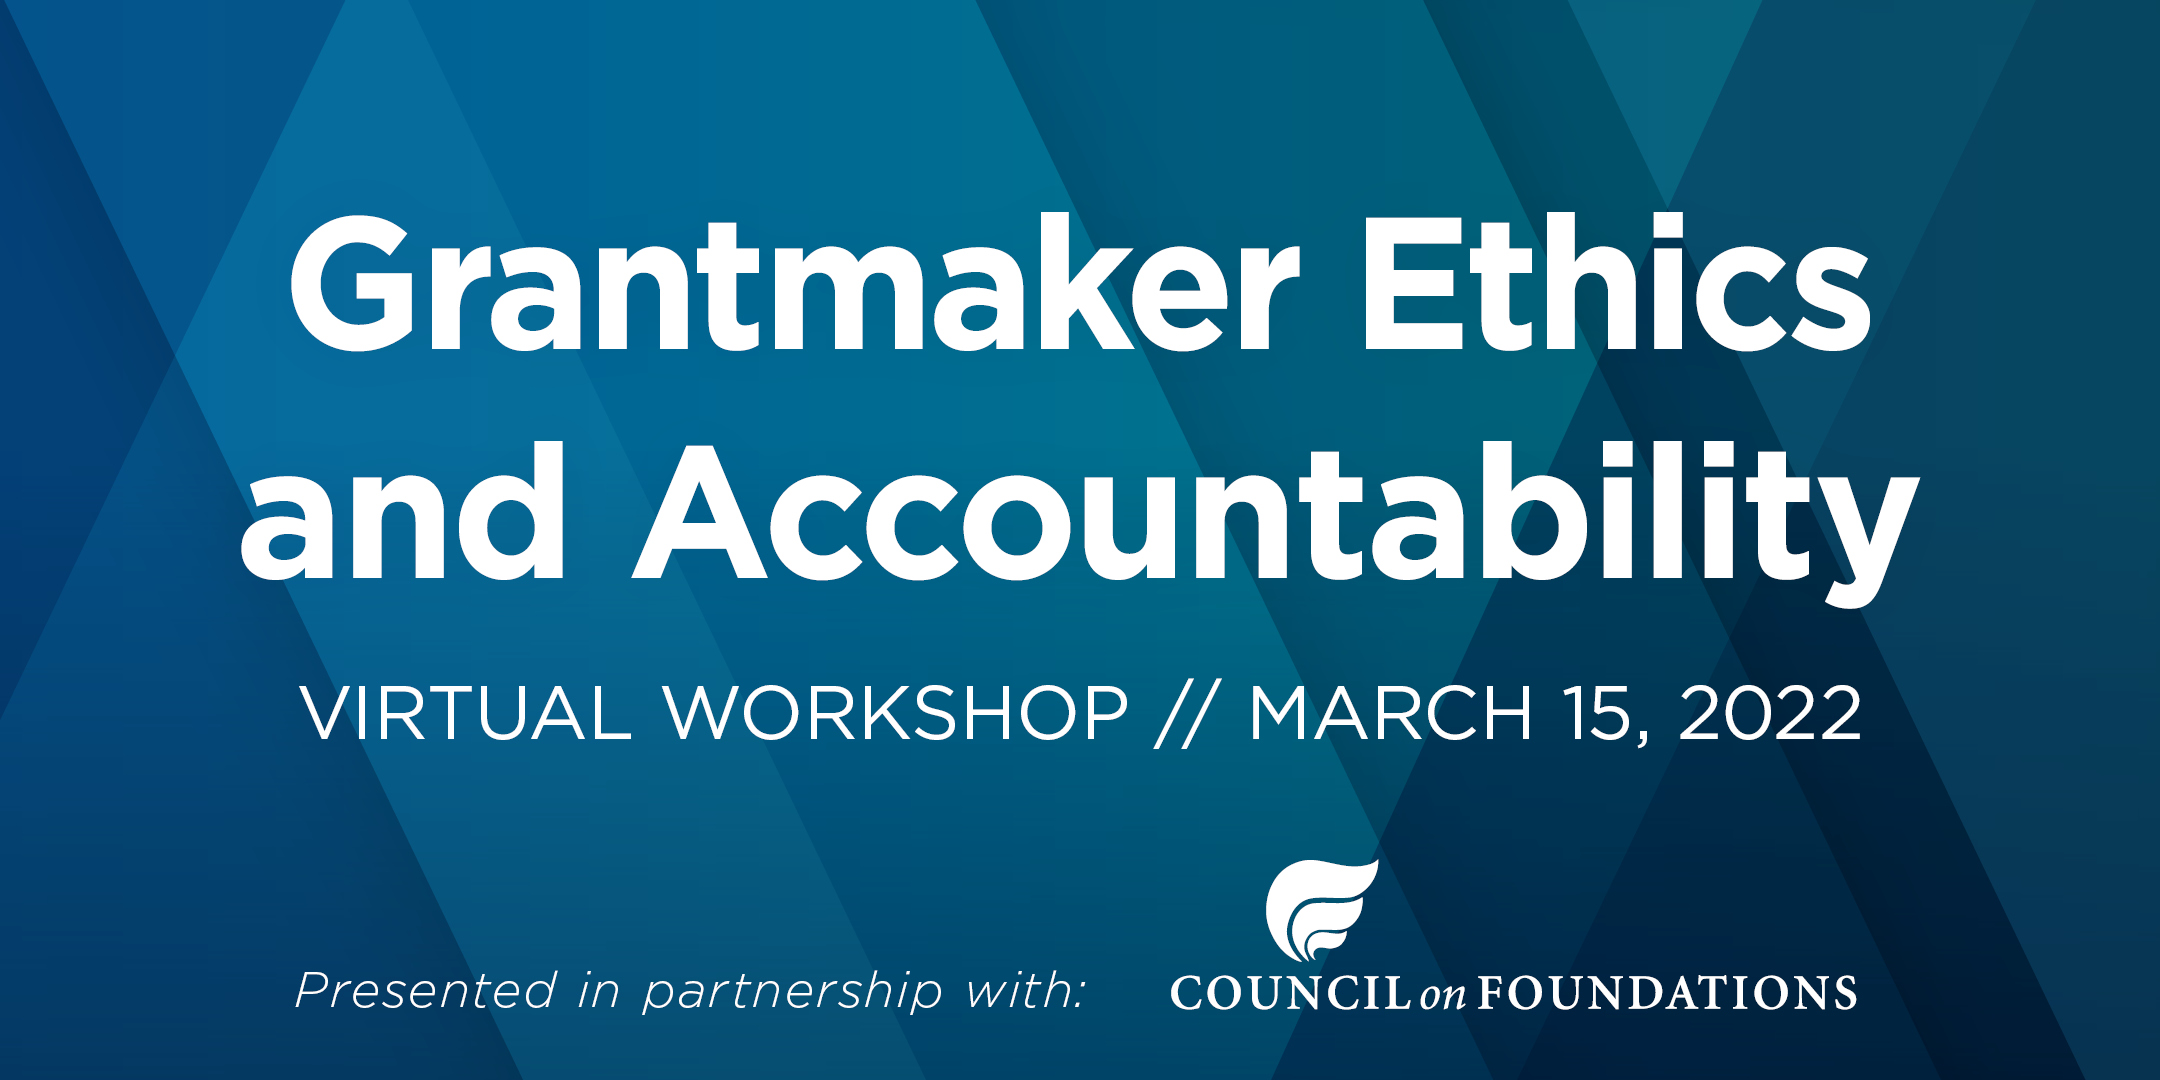 Grantmaker Ethics and Accountability